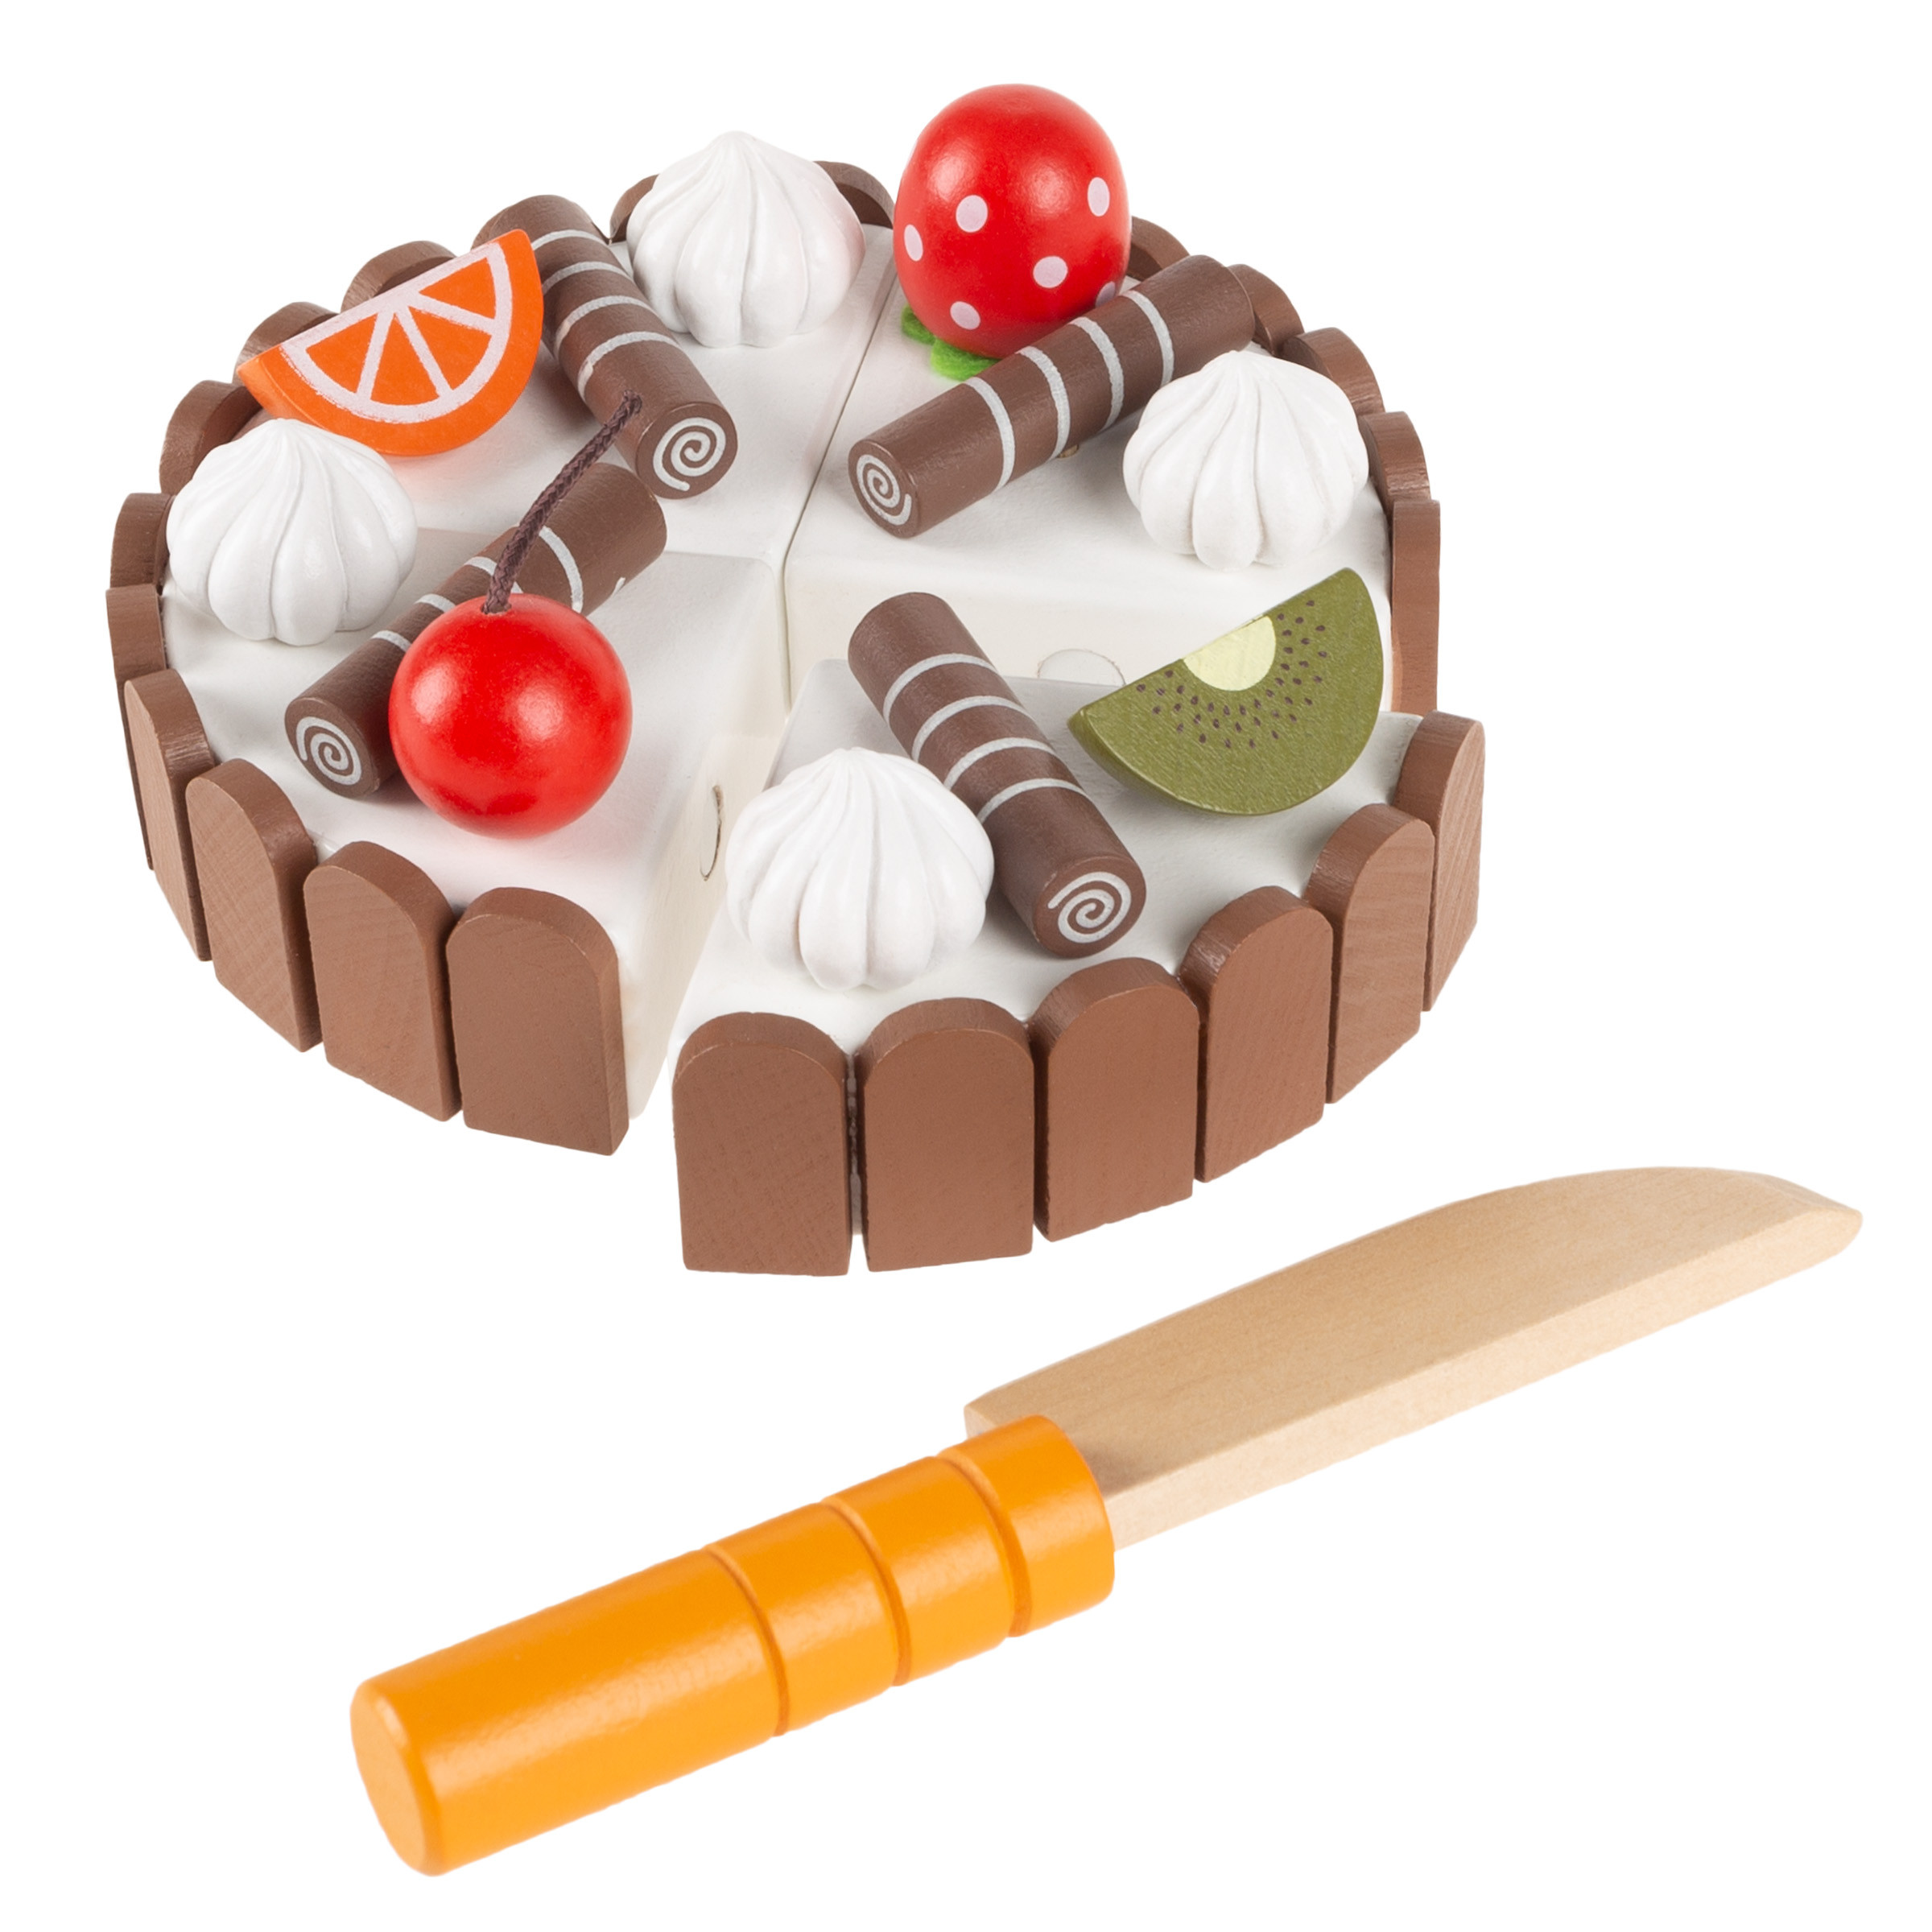 Walmart Kids Birthday Cake
 Birthday Cake Kids Wooden Magnetic Toy Dessert Play Set by